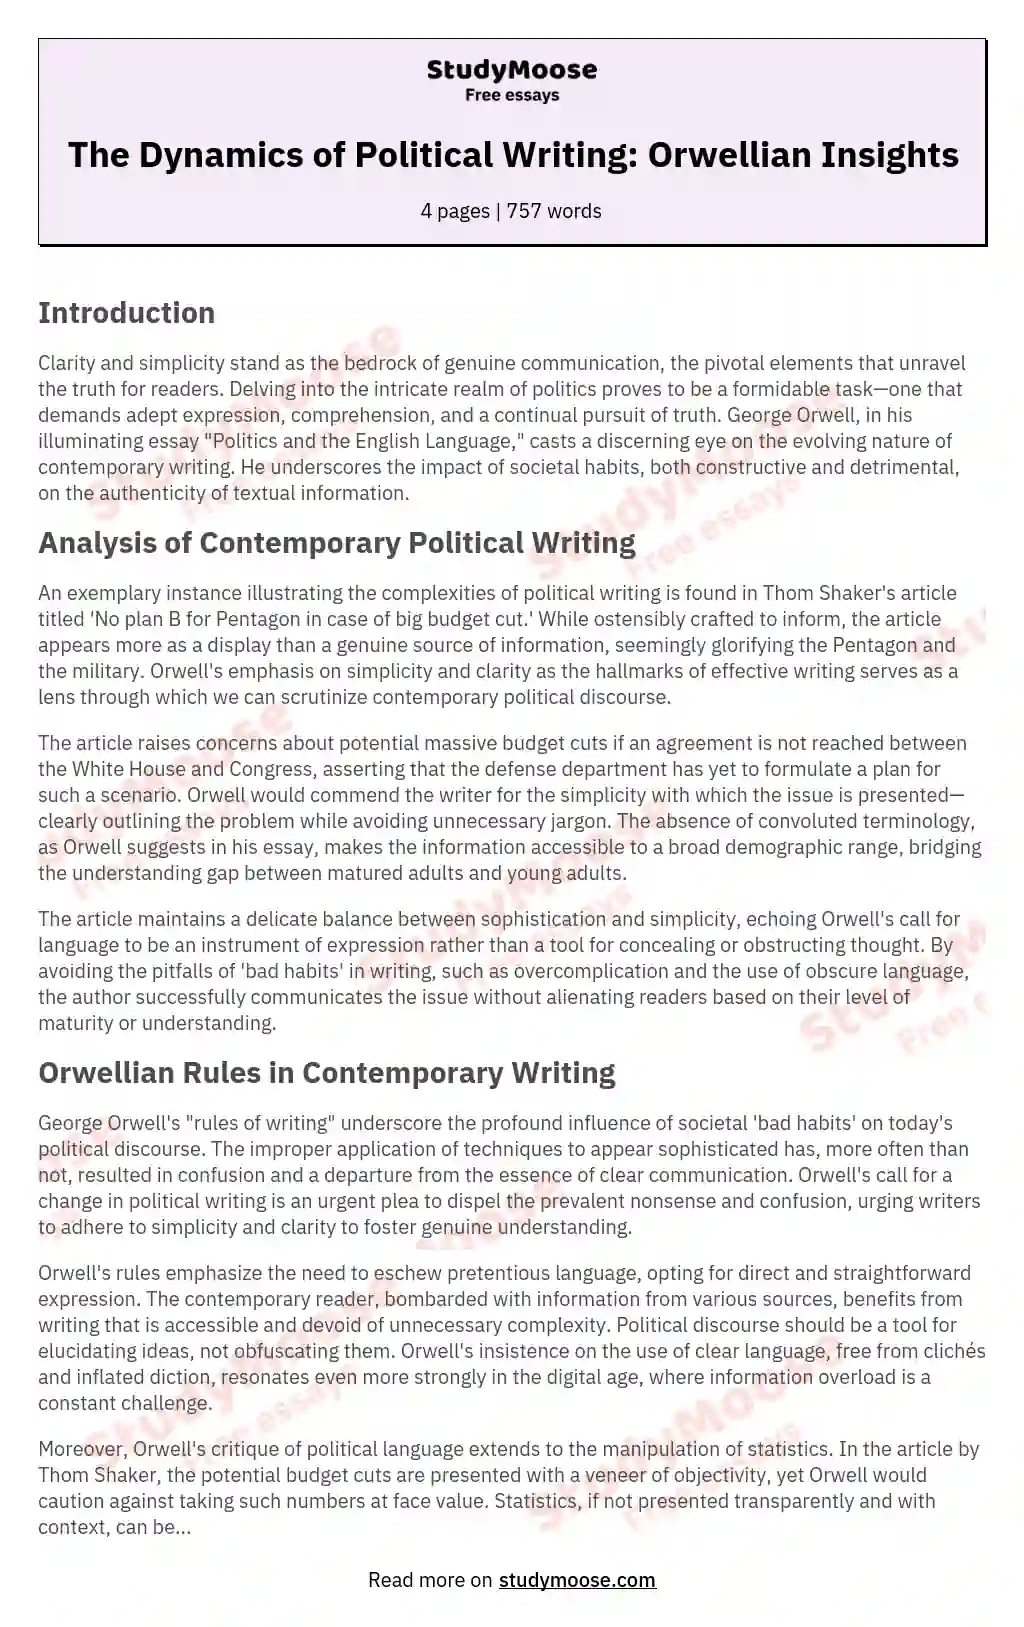 The Dynamics of Political Writing: Orwellian Insights essay